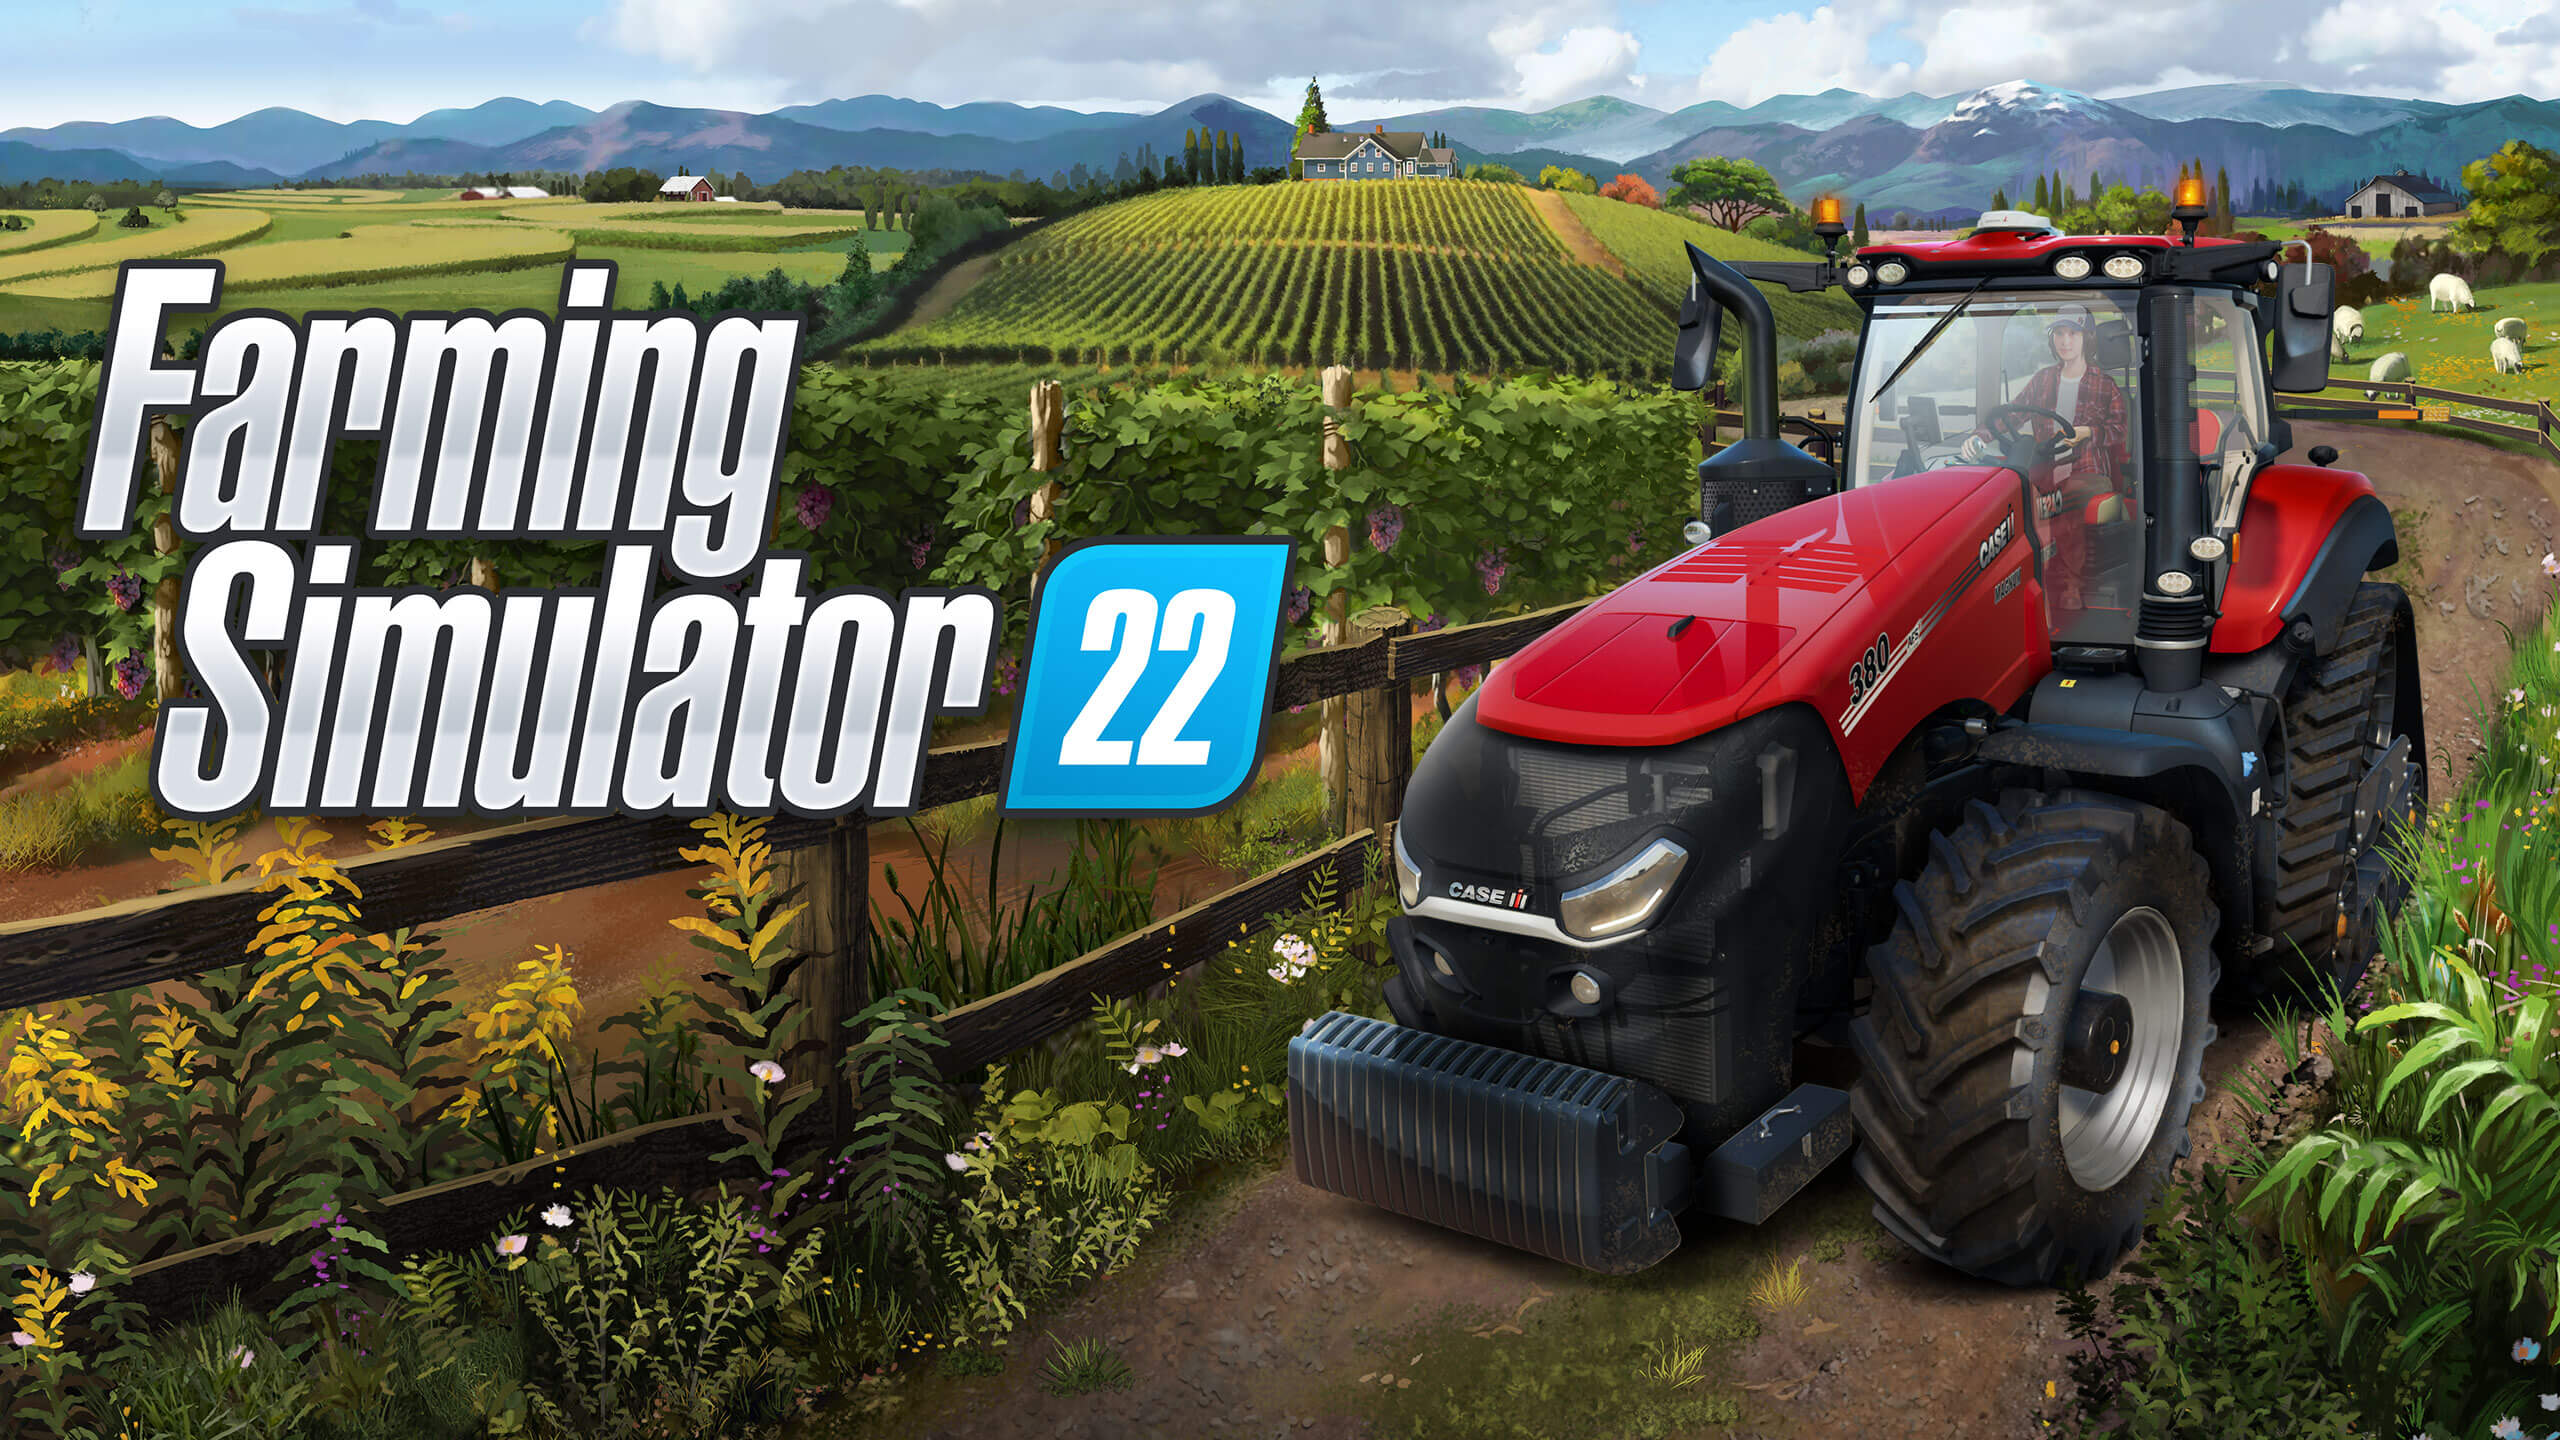 Farming Simulator 22 Update und DLC jetzt verfügbar Titel